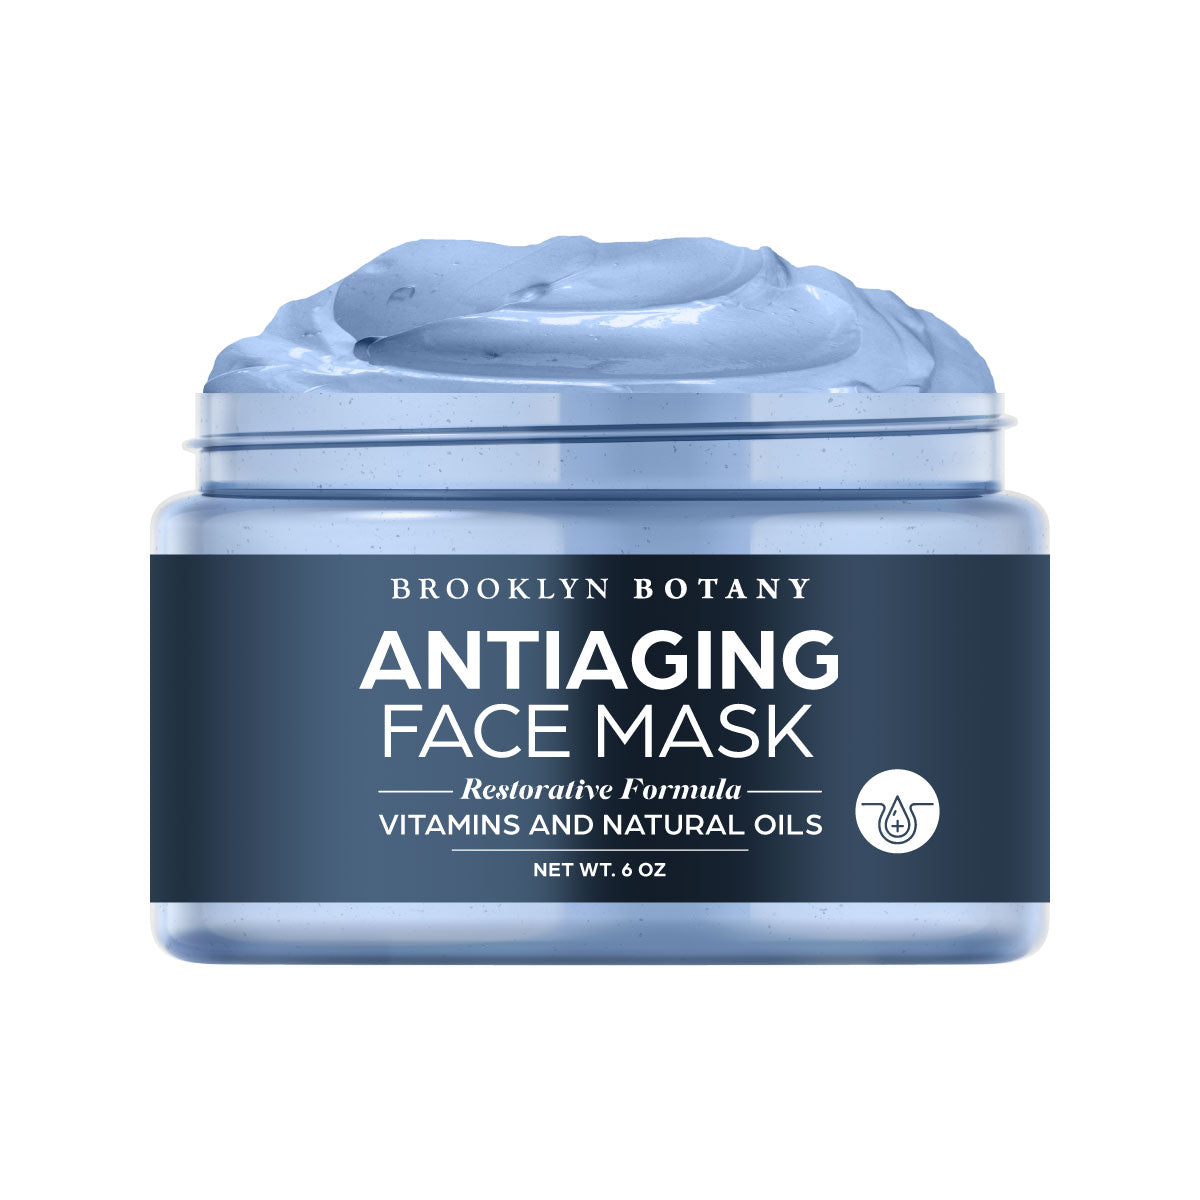 Antiaging Face Mask 6 oz